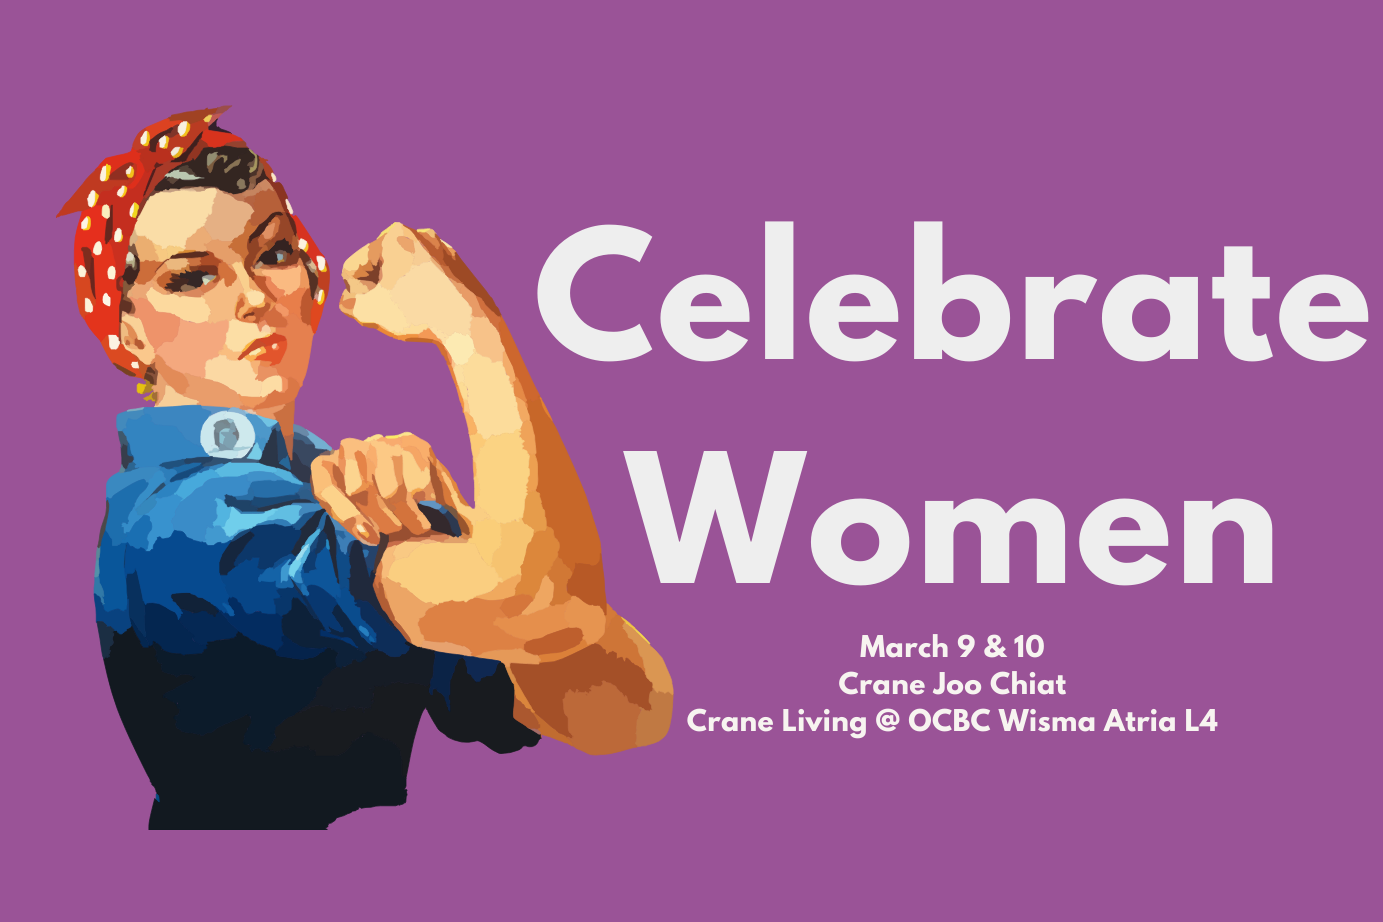 Celebrate Women with Crane Living